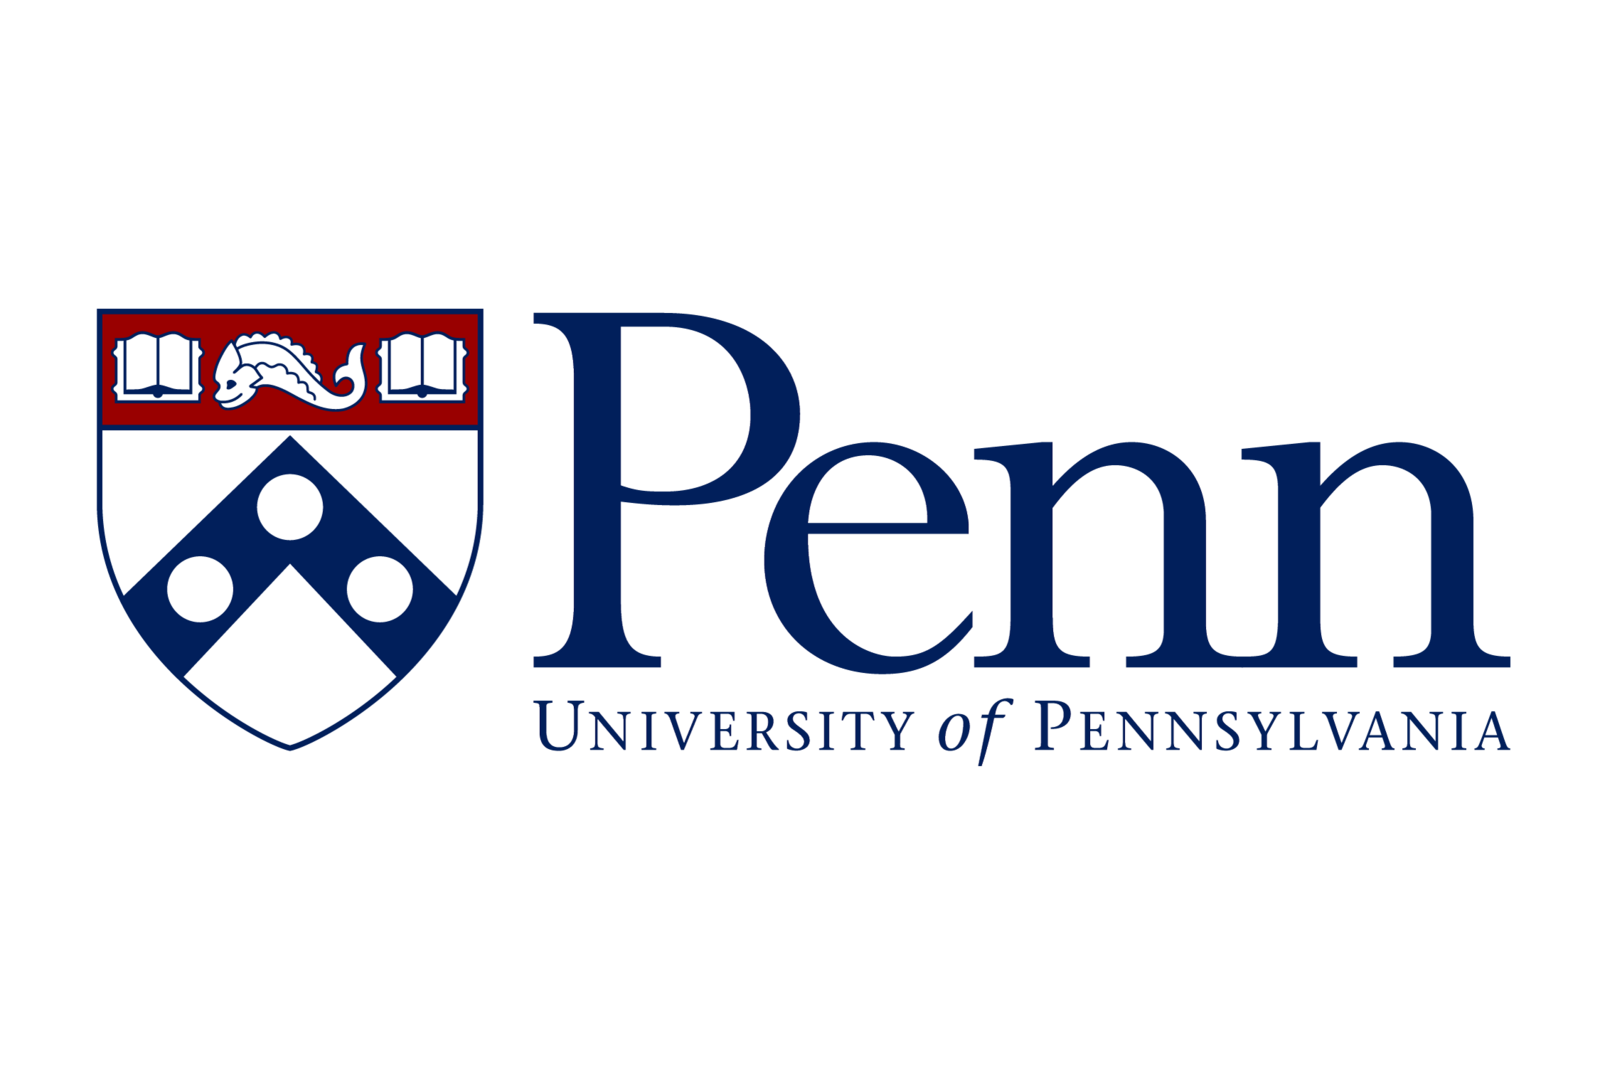 Logo of the University of Pennsylvania